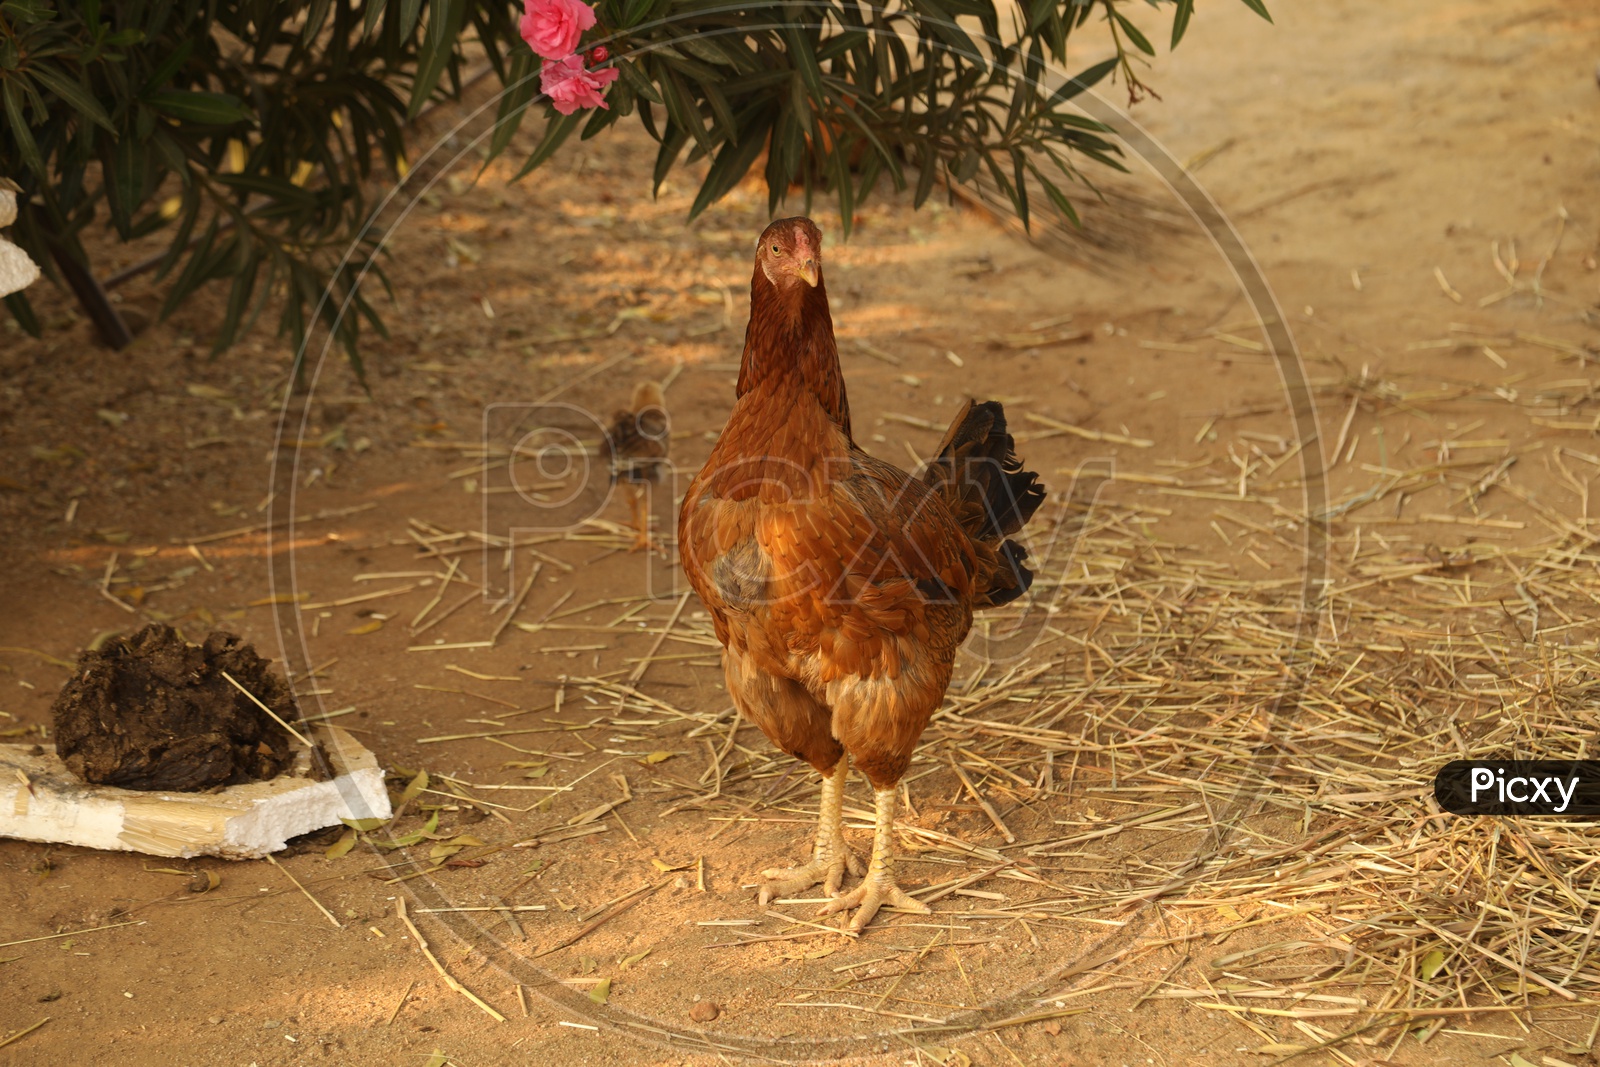 A hen beside the cow dung